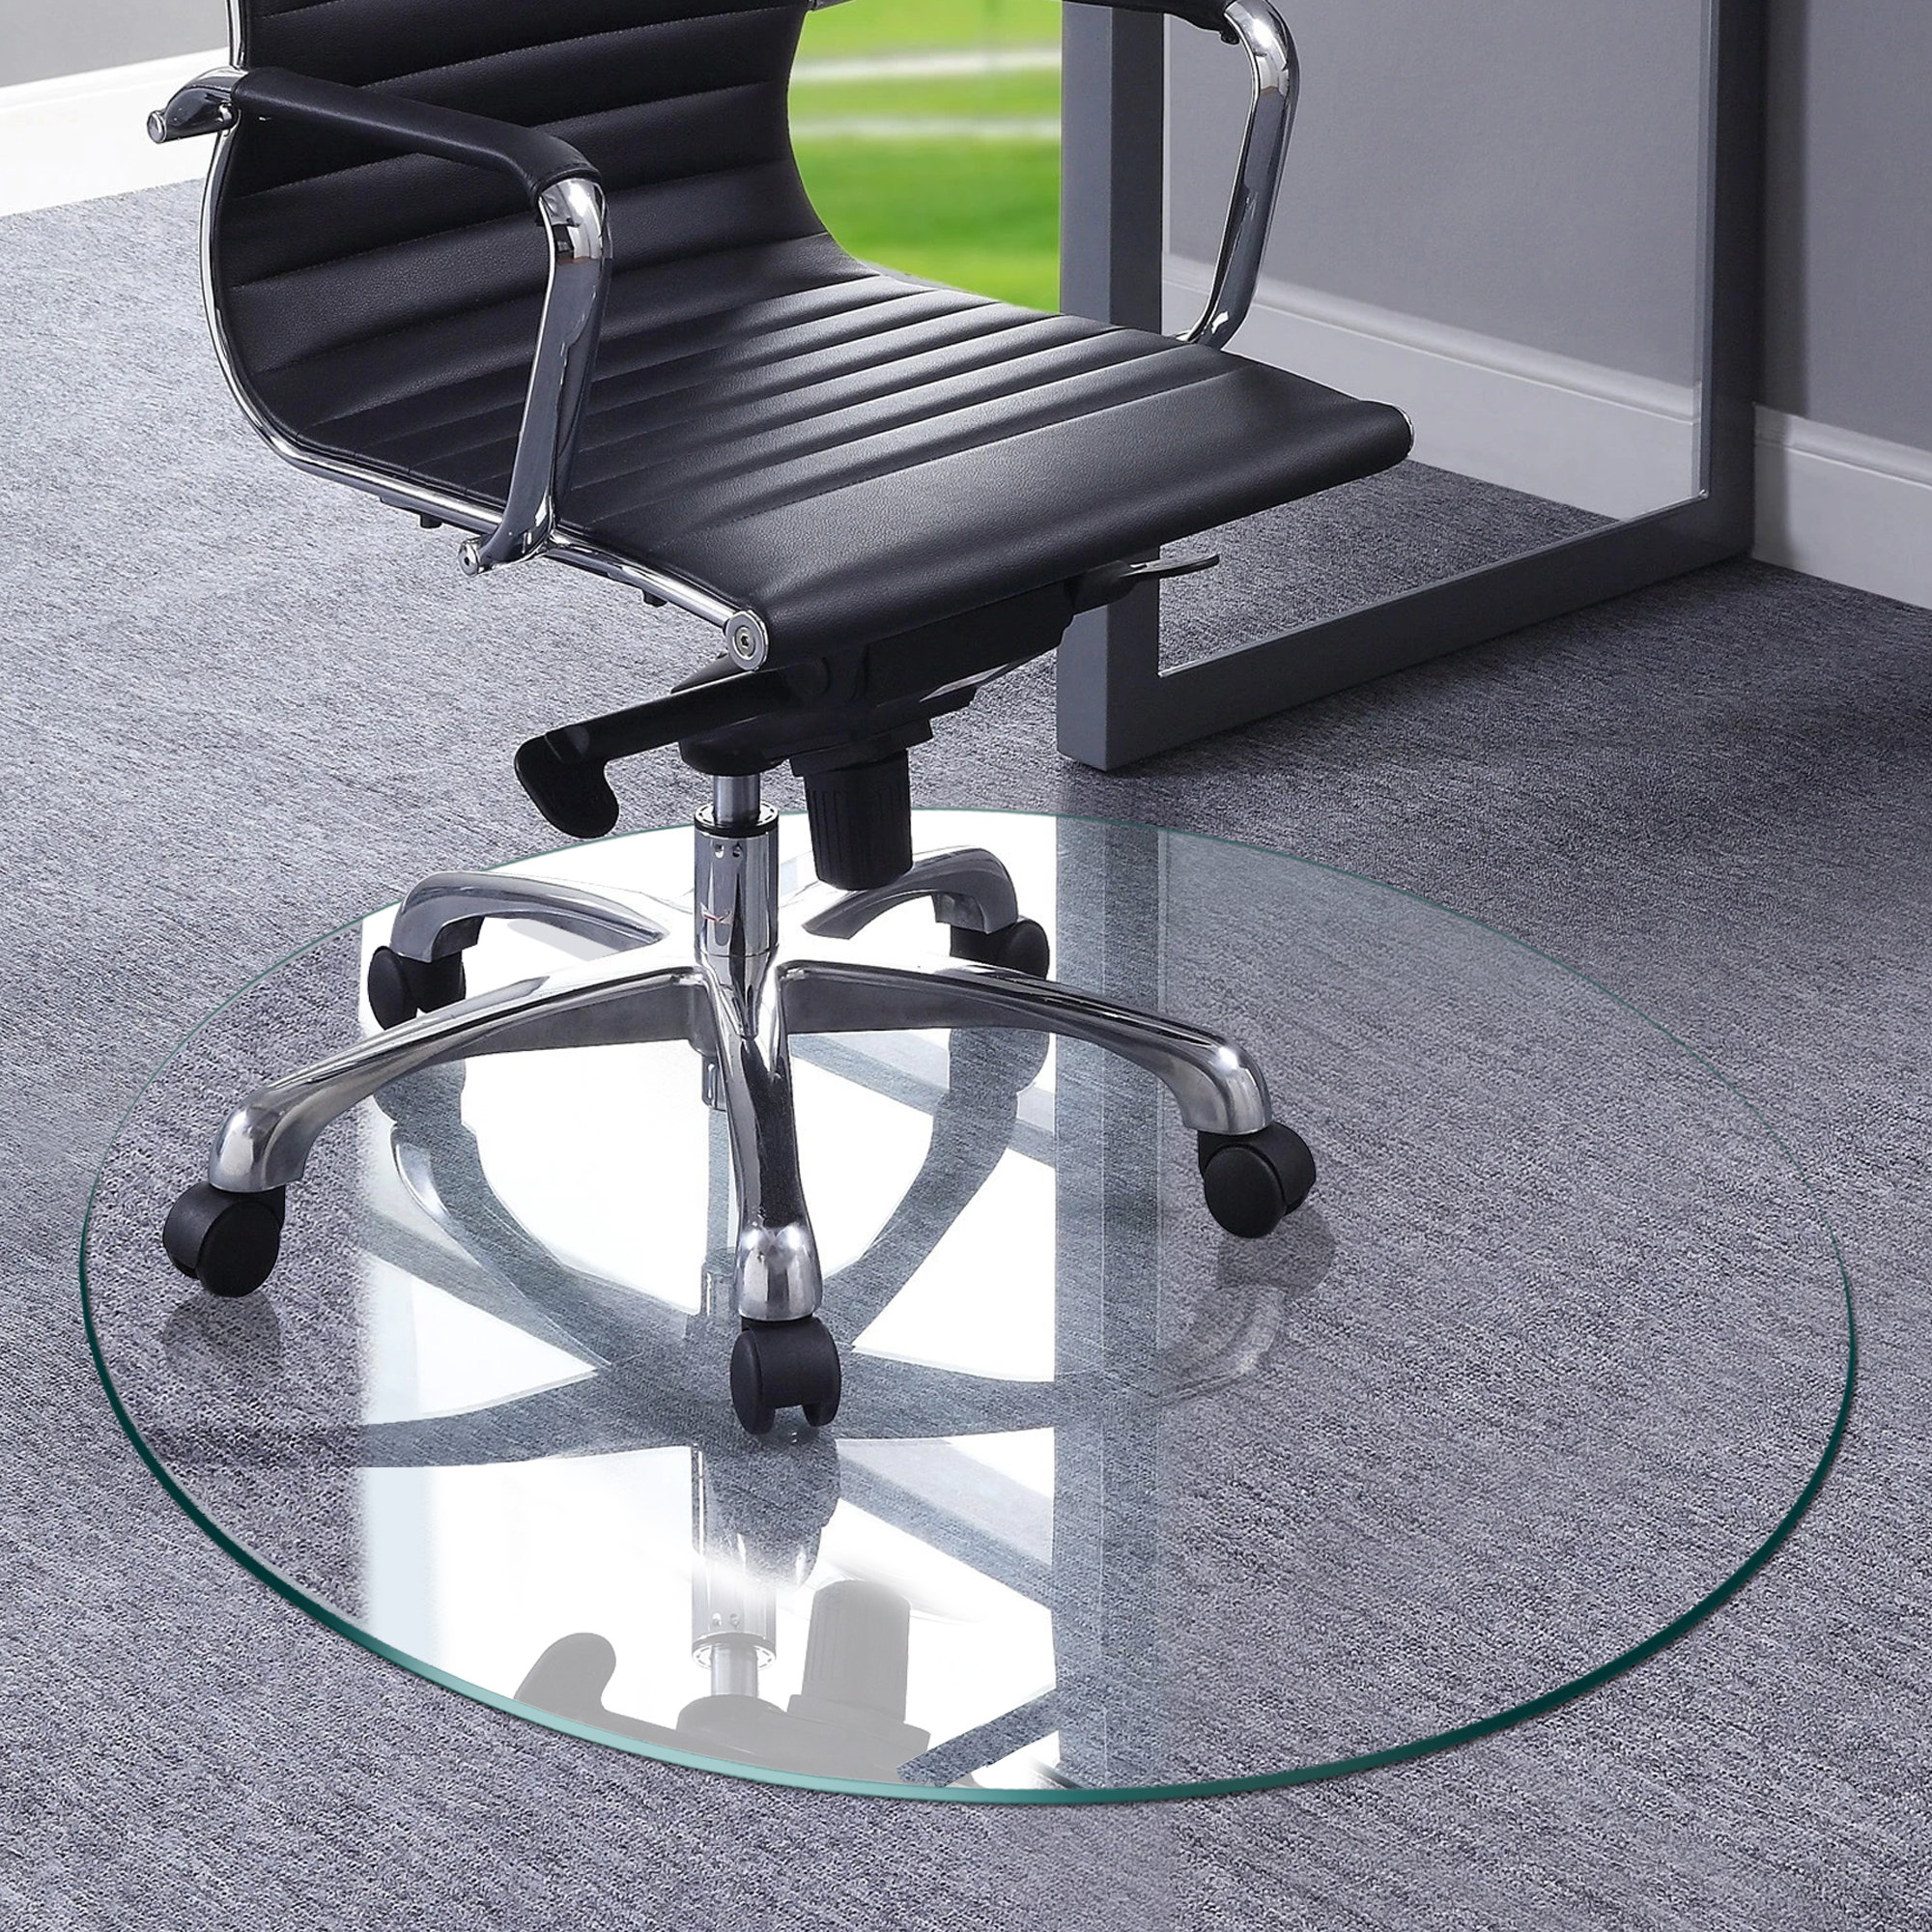 Glass Chair Mats vs Plastic Chair Mats for Carpet & Wood Floors